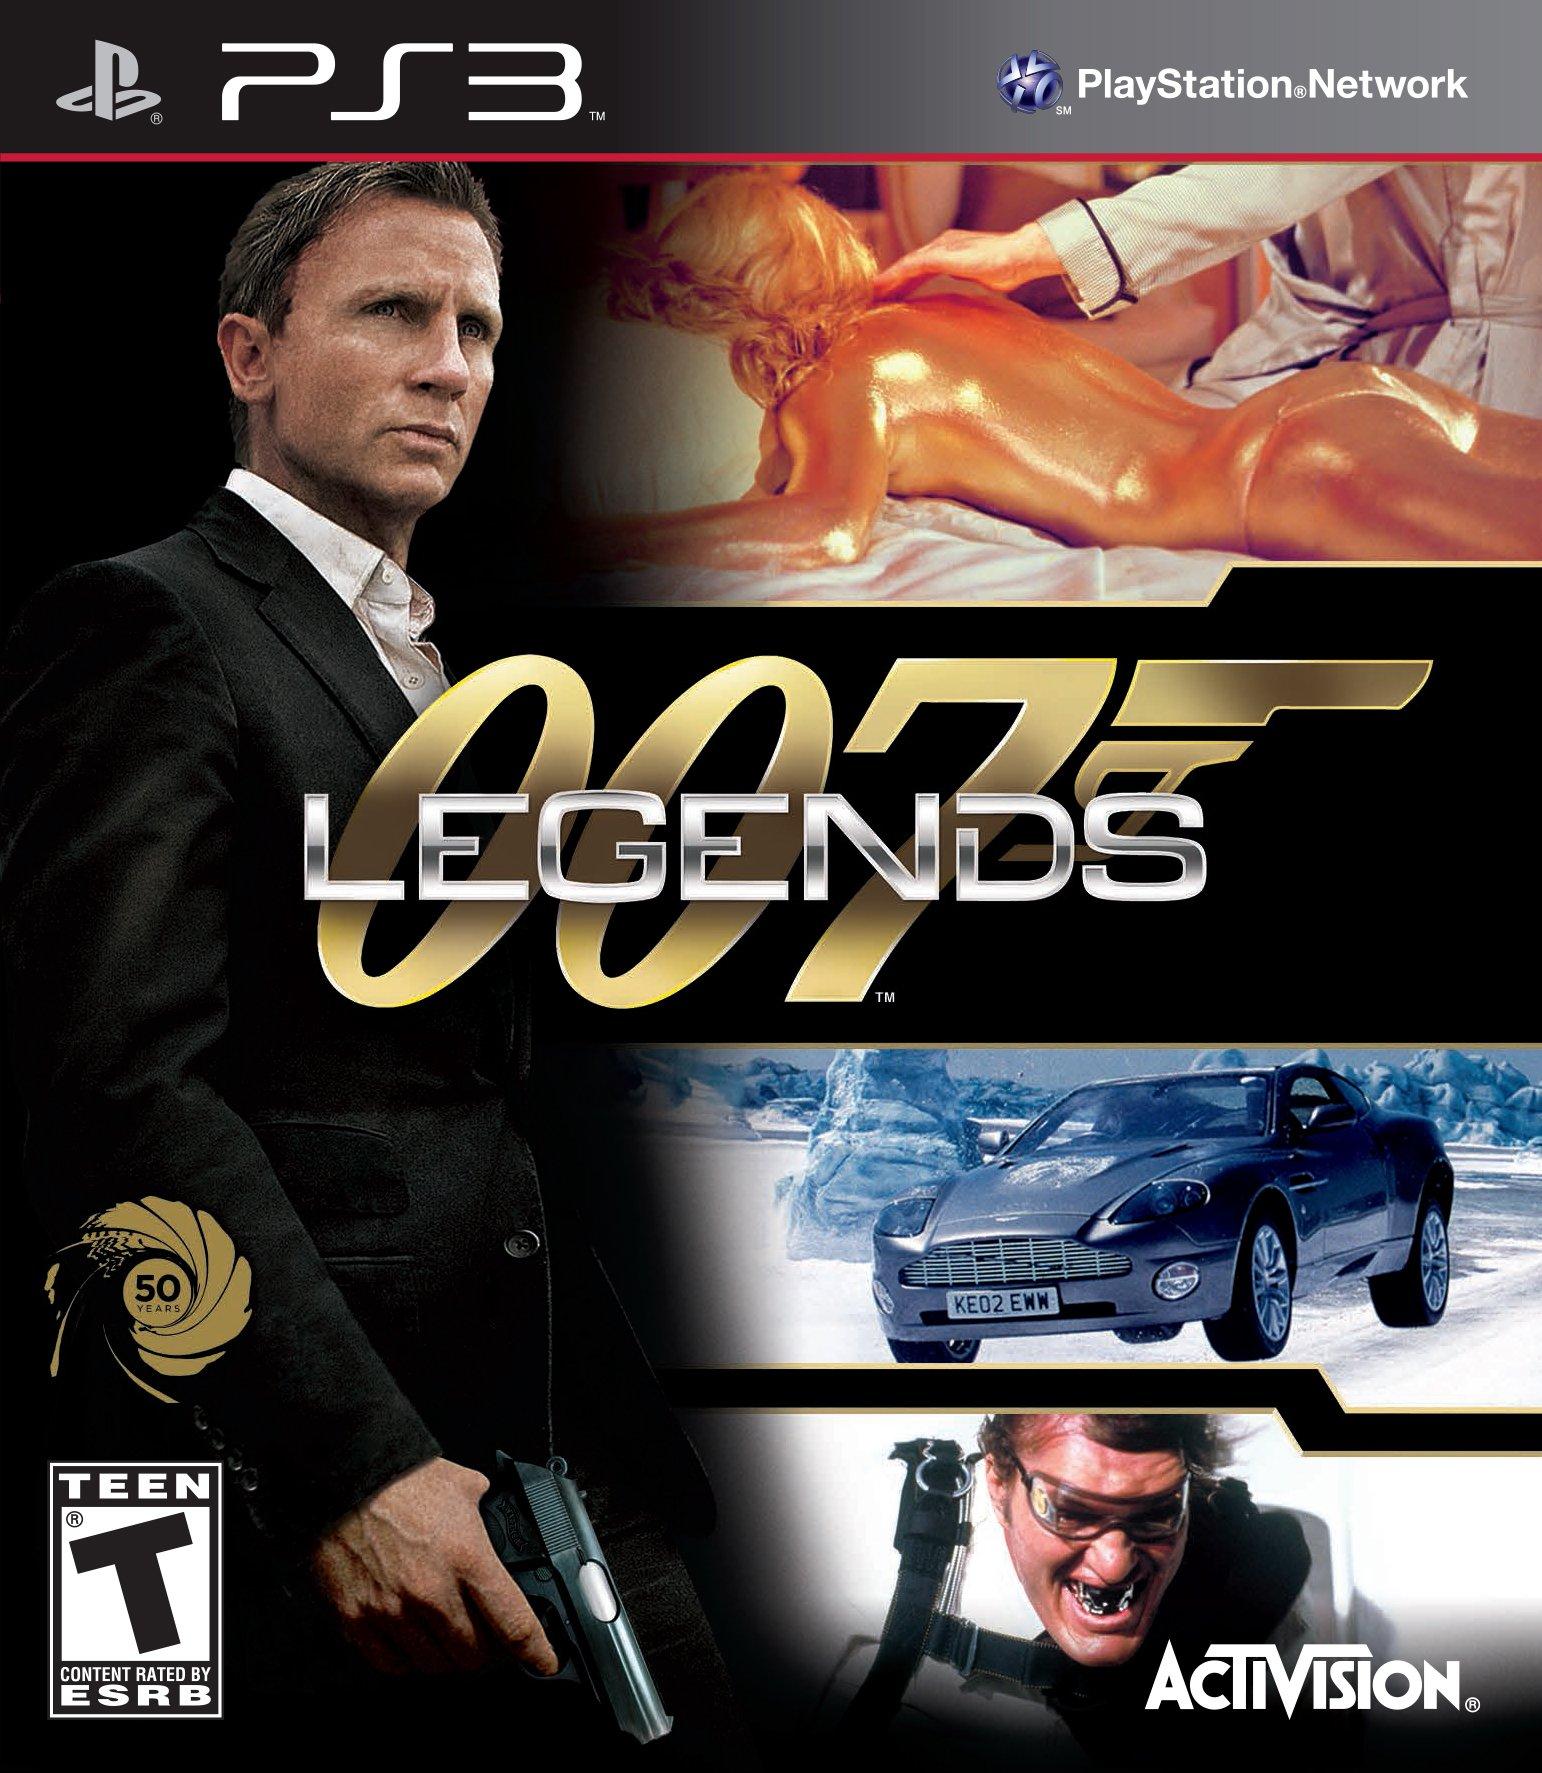 007 games xbox 360